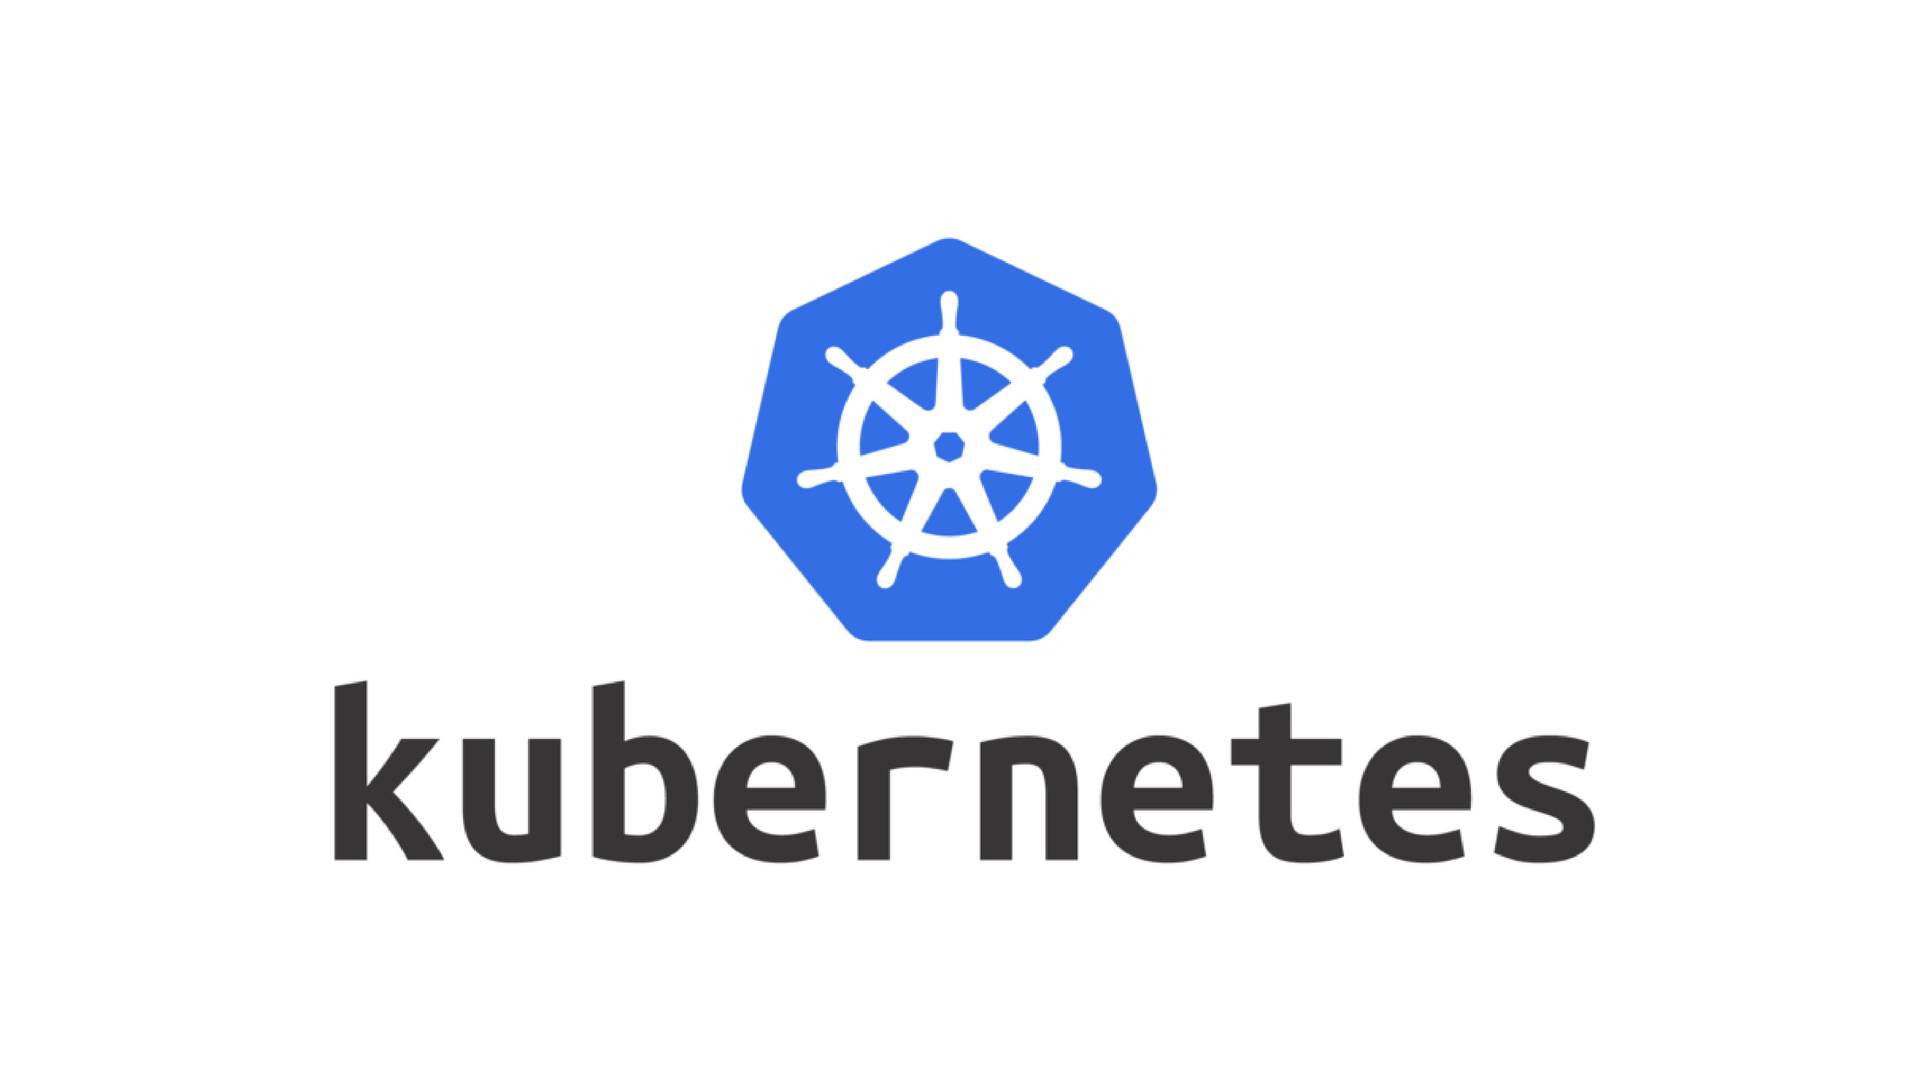 Web development in Ethiopia using Kubernetes